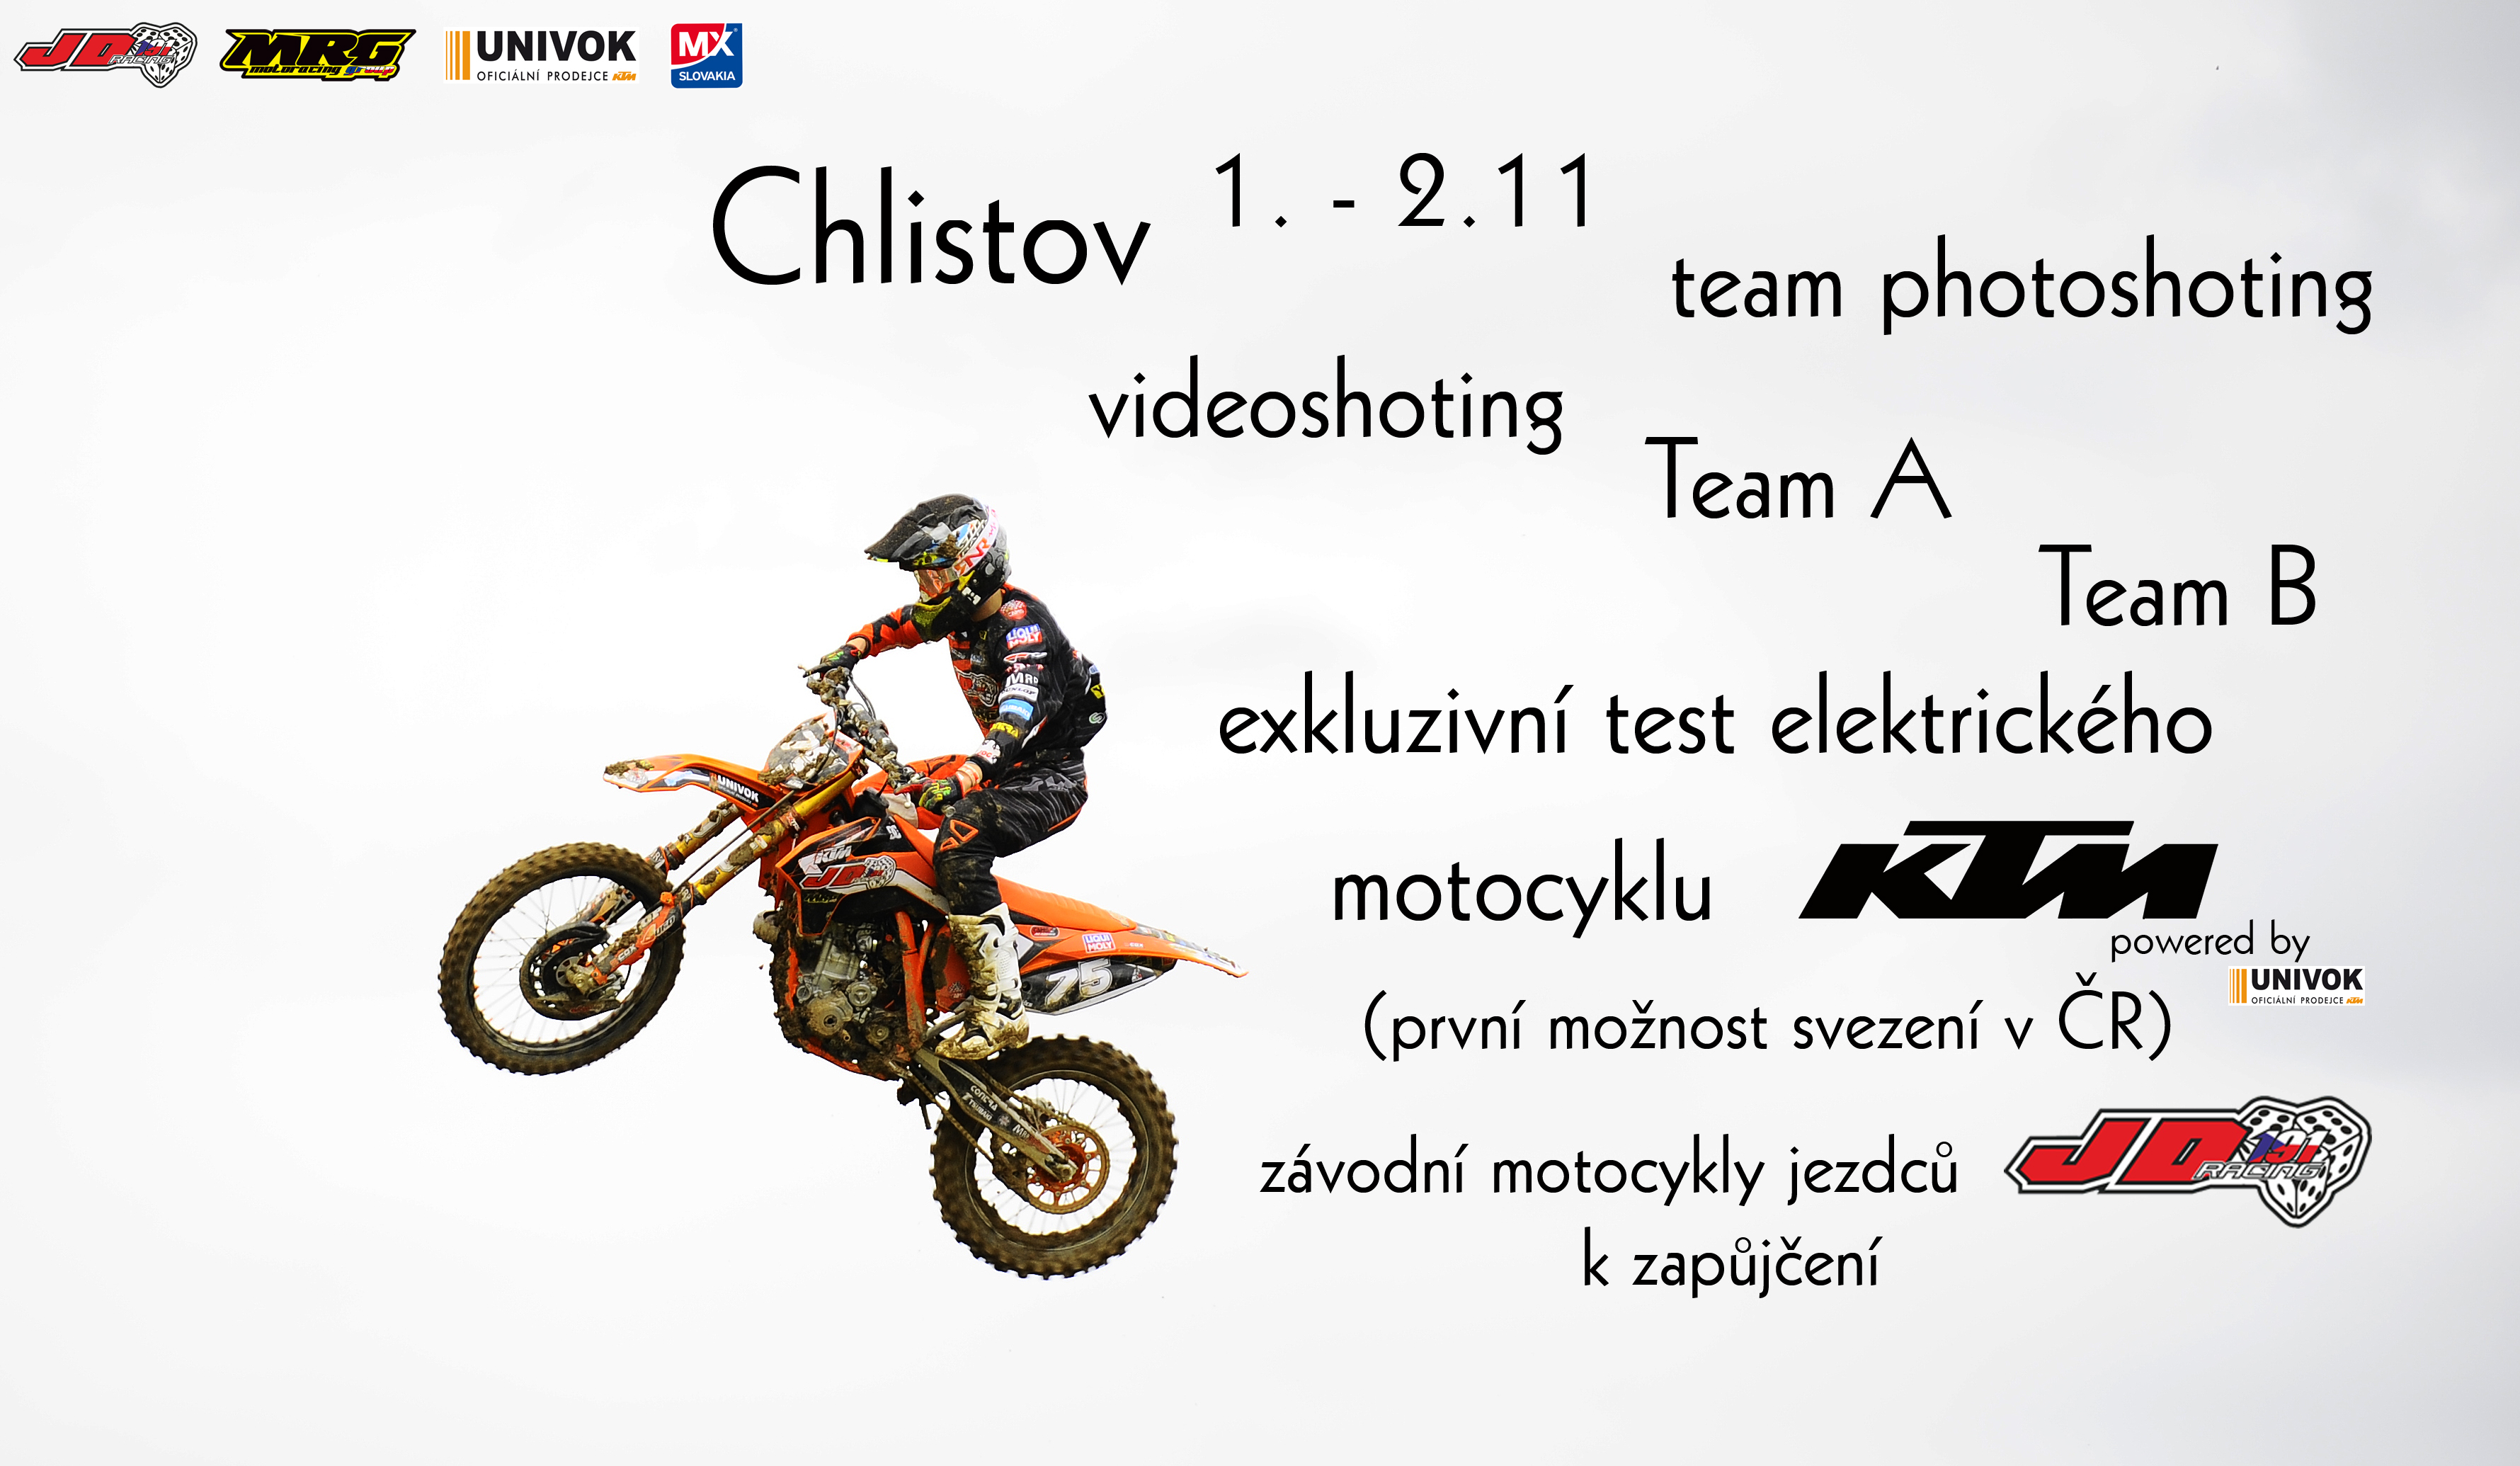 JD191KTM - MRG racing team Day Chlistov